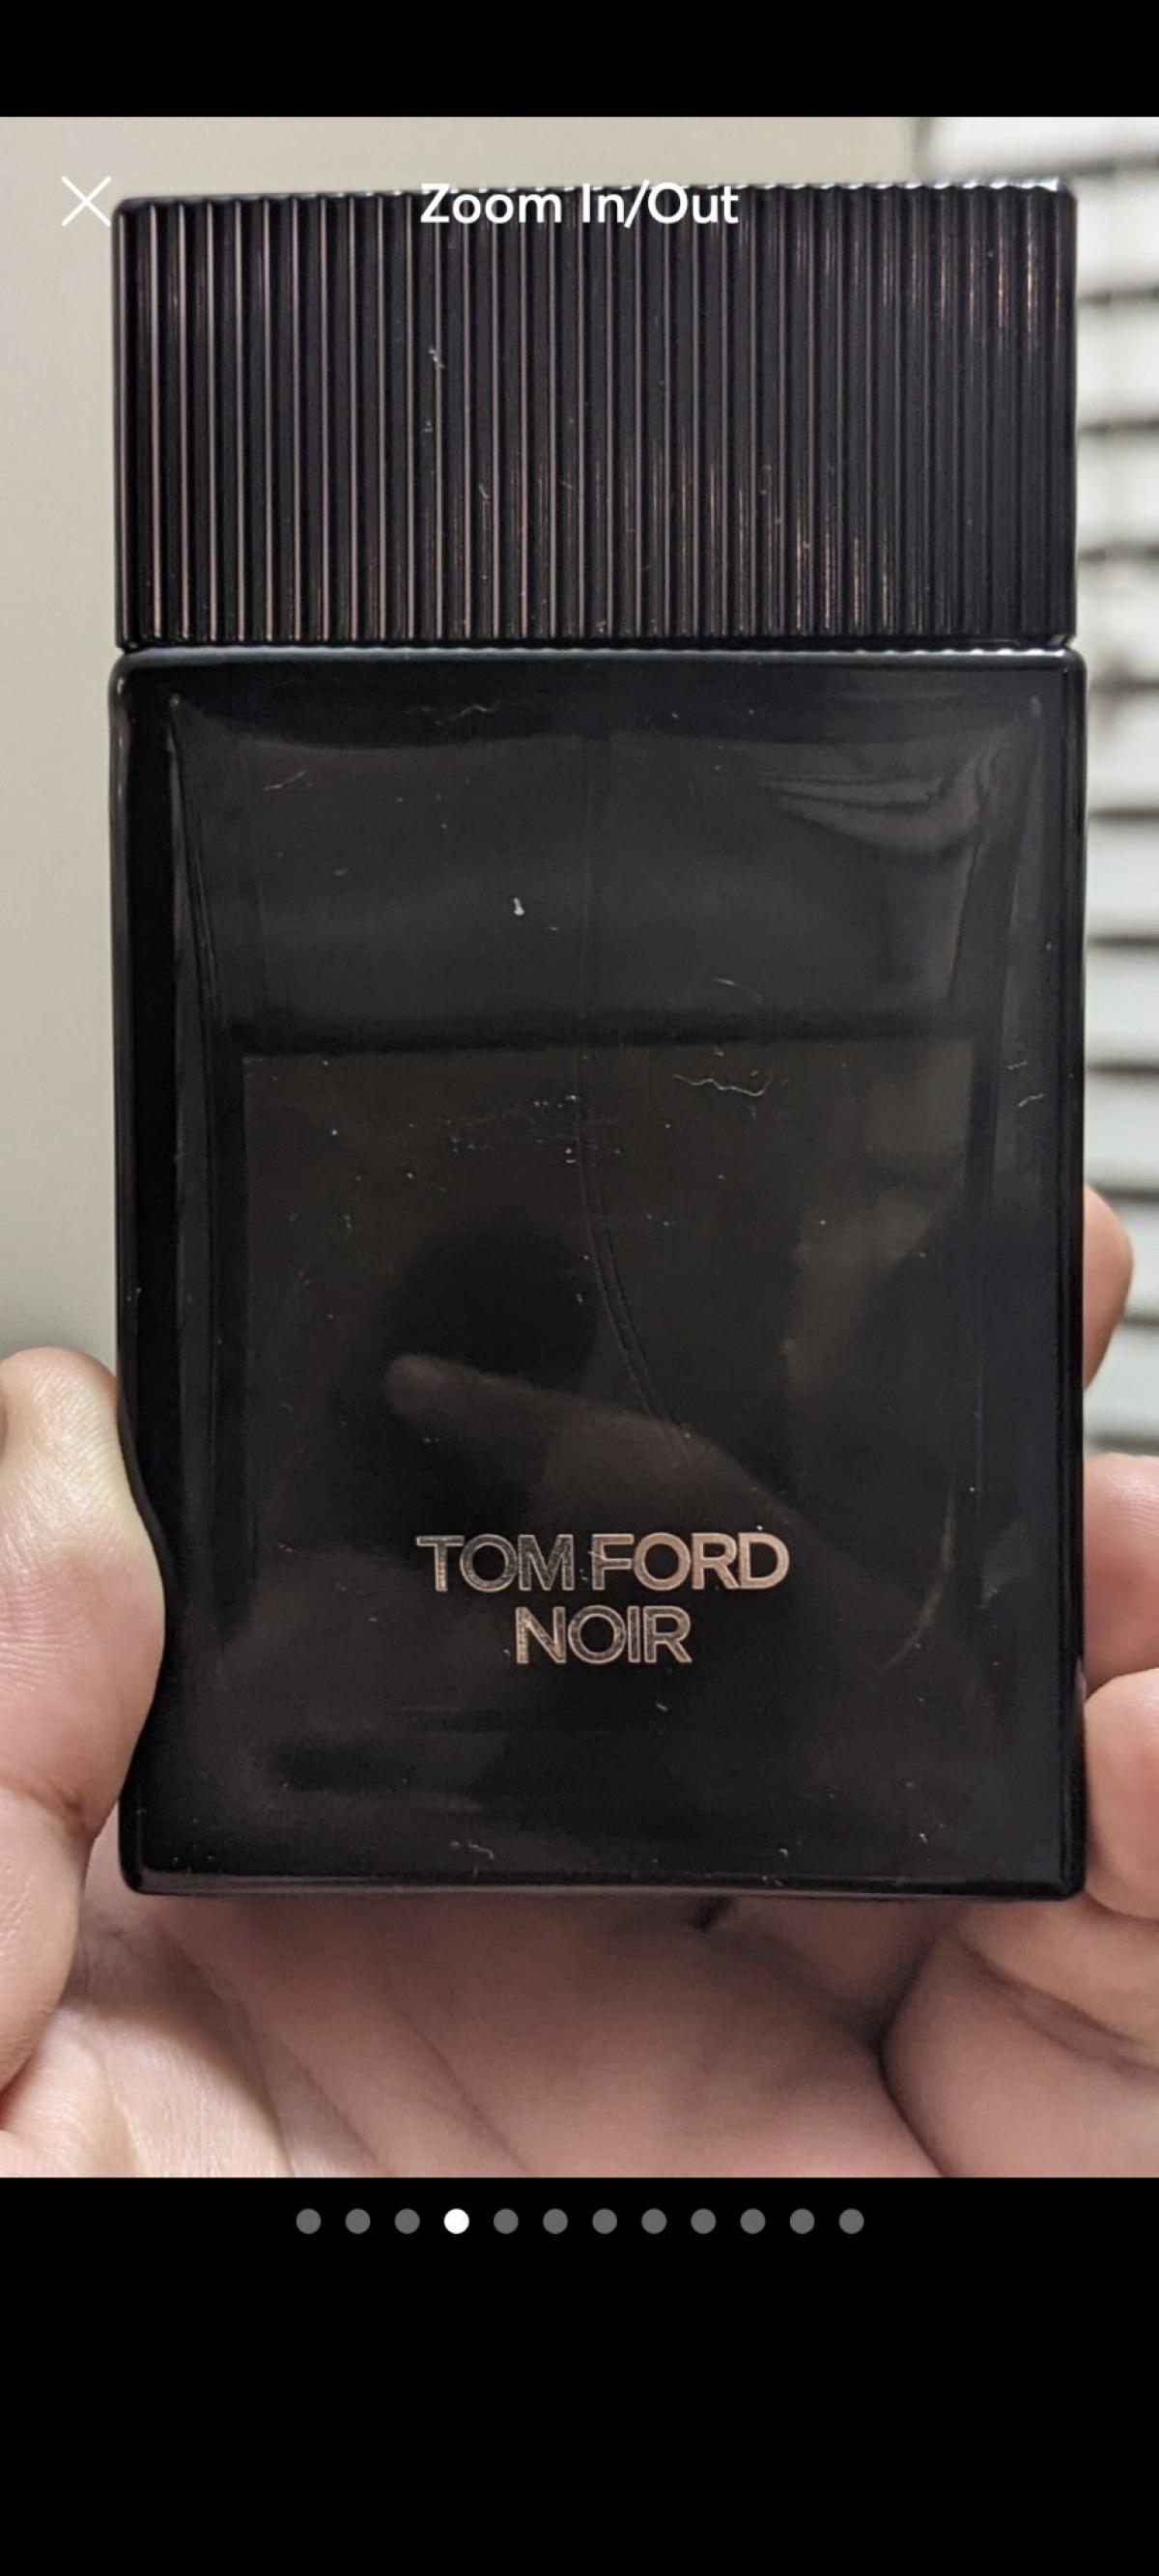 Noir Tom Ford cologne - a fragrance for men 2012